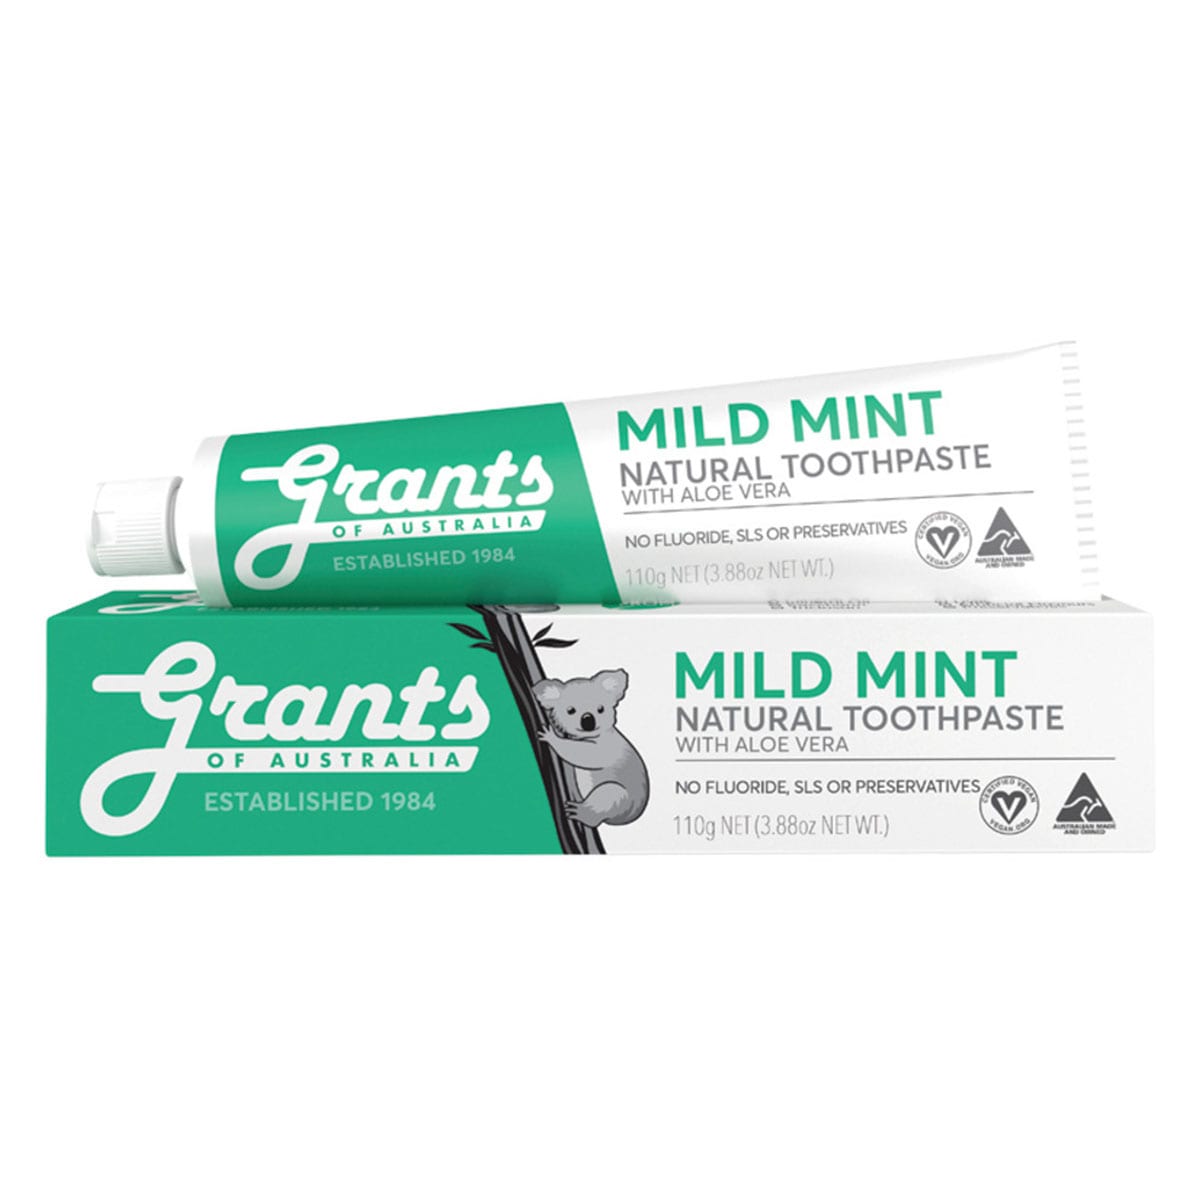 Grants Natural Toothpaste Mild Mint Fluoride Free 110g